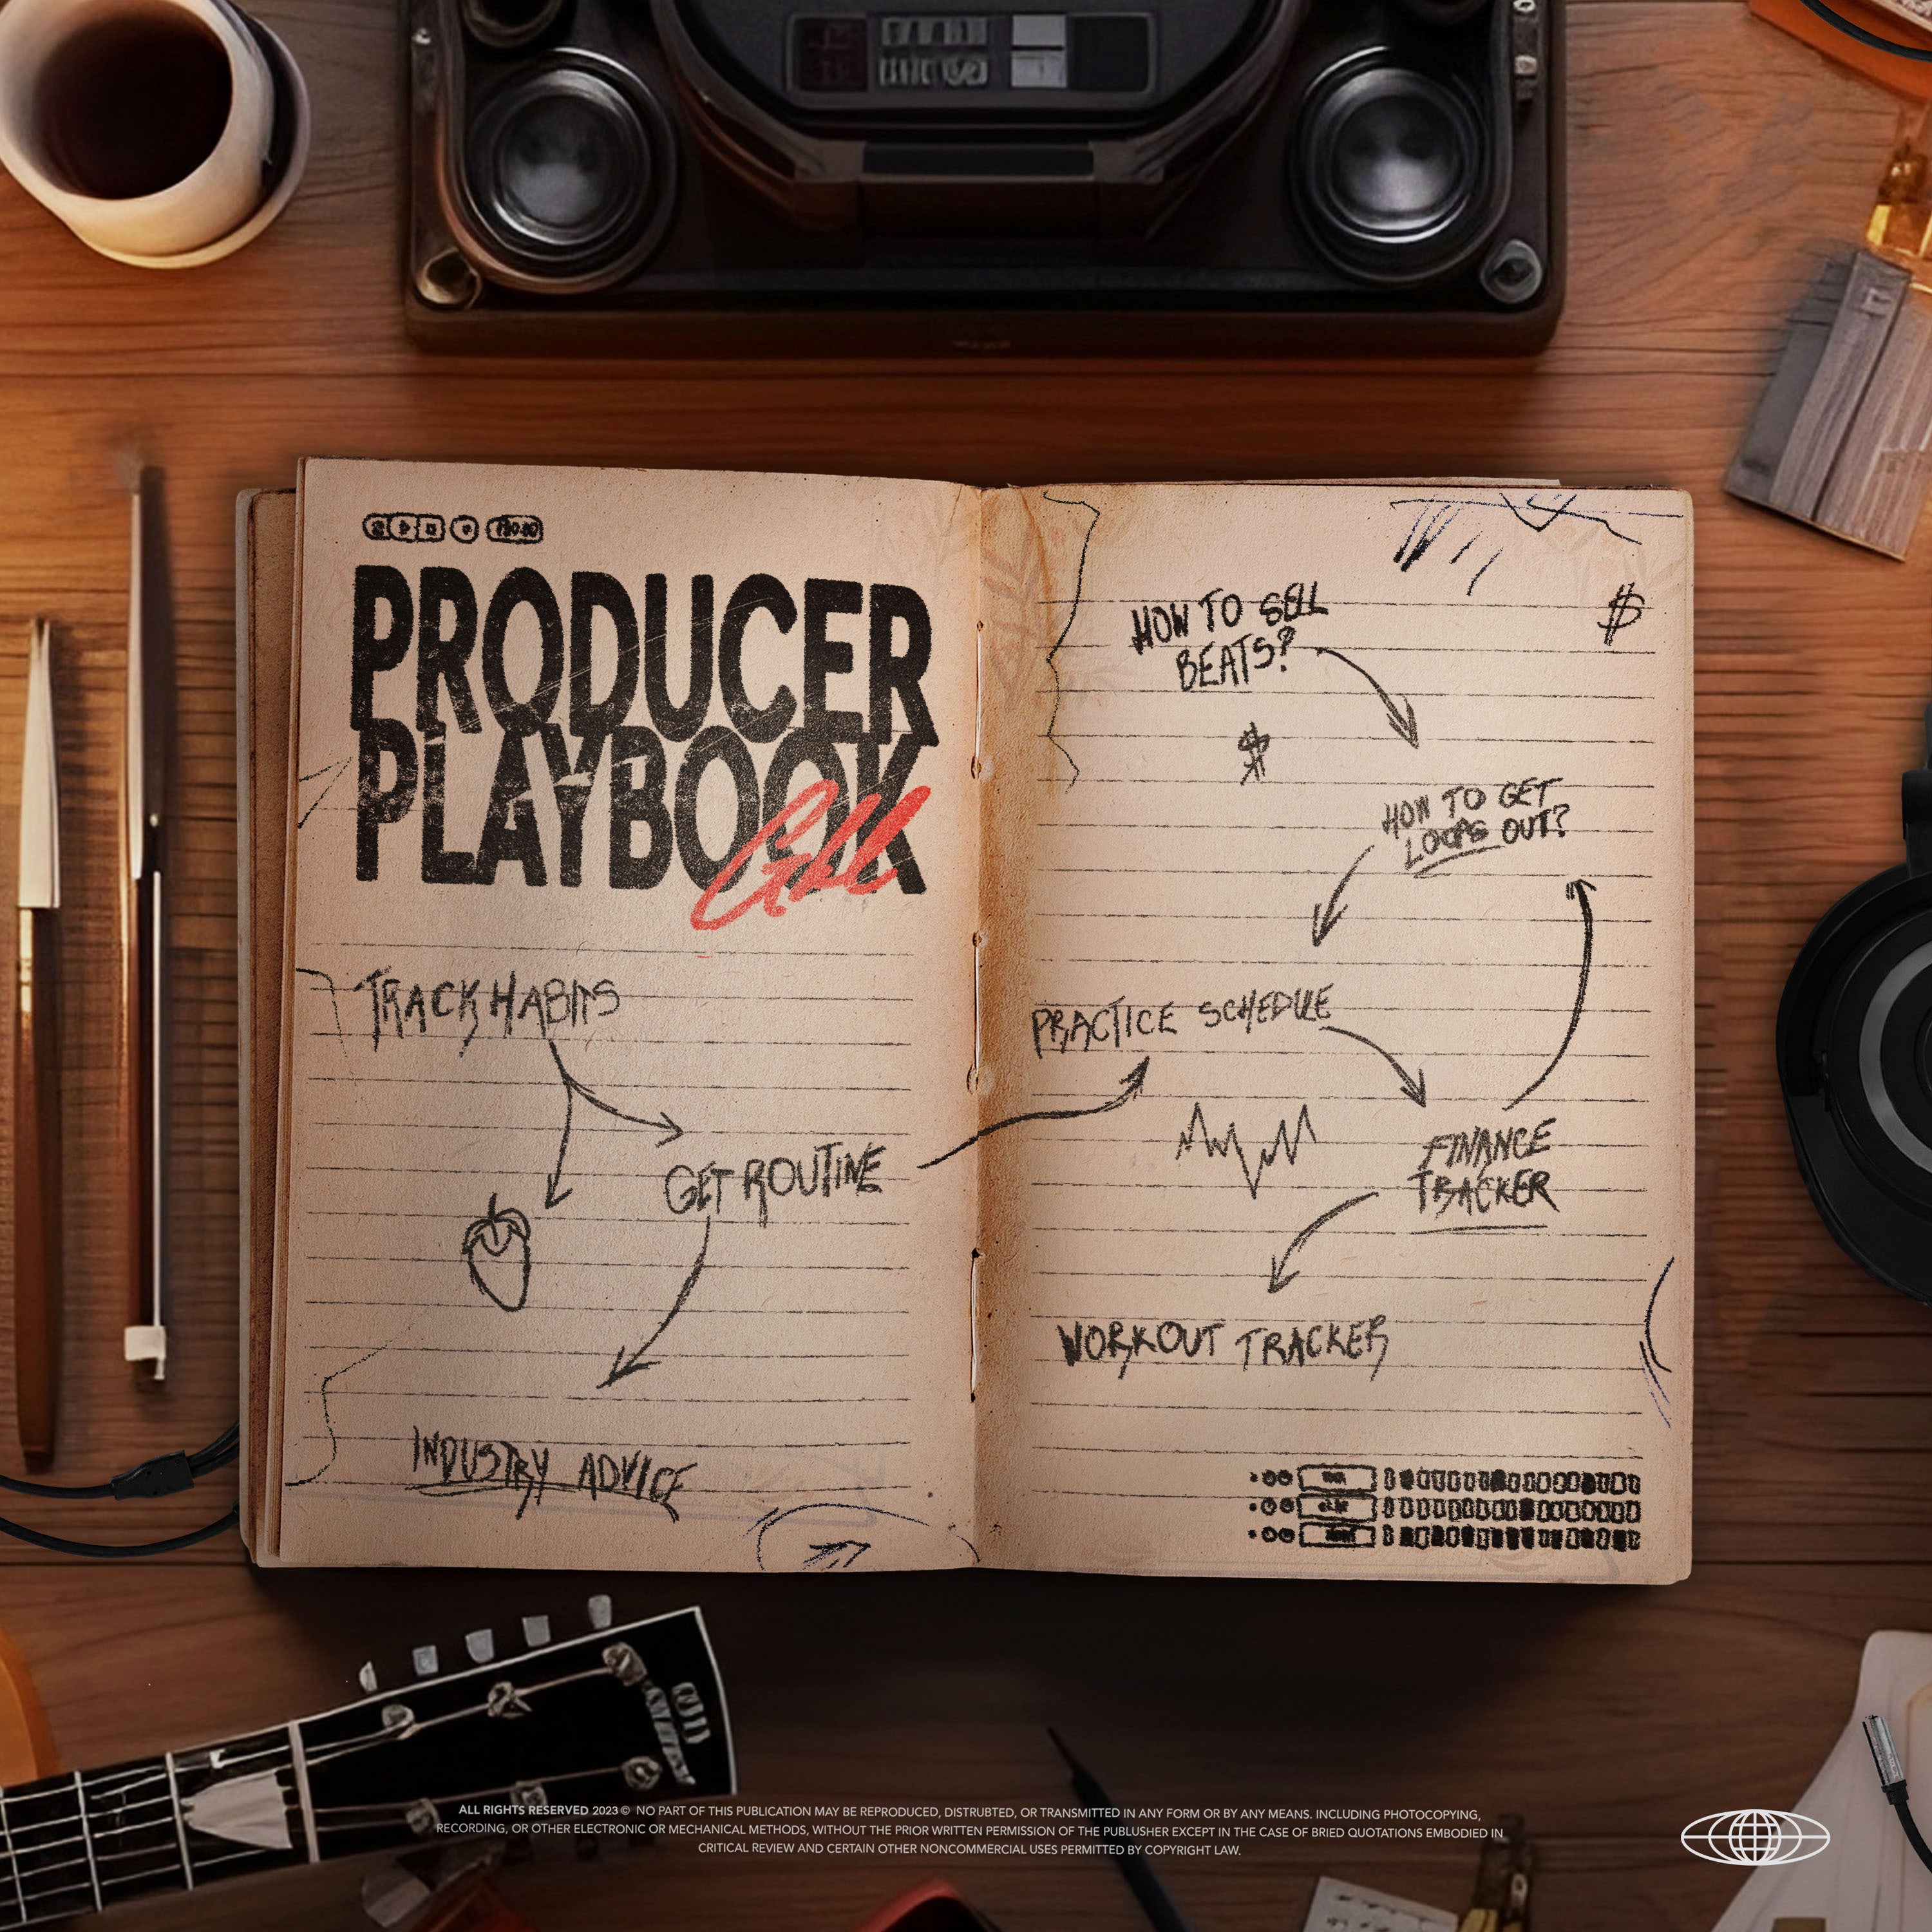 Producer Playbook